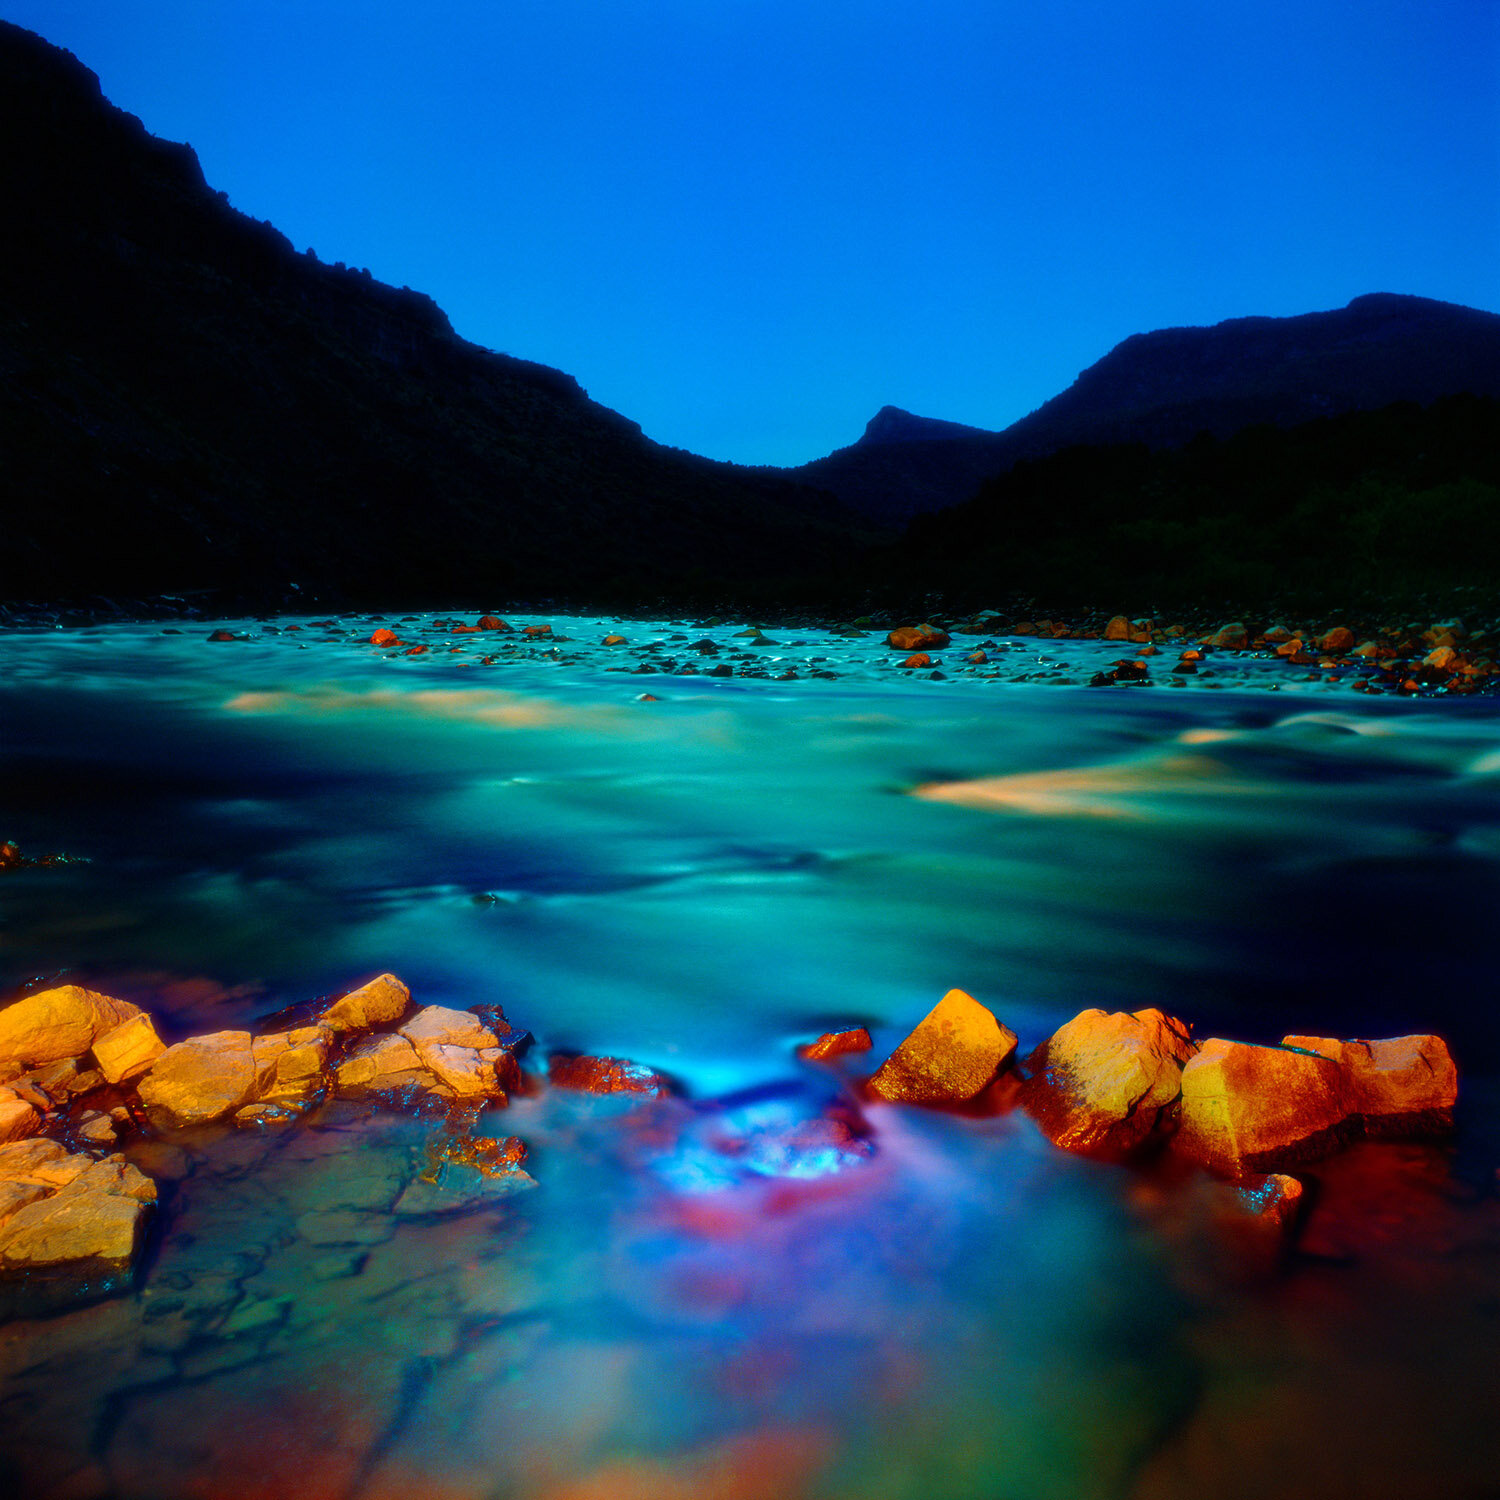 Salt River by Full Moon Light and Flashlight, Salt River Canyon, AZ